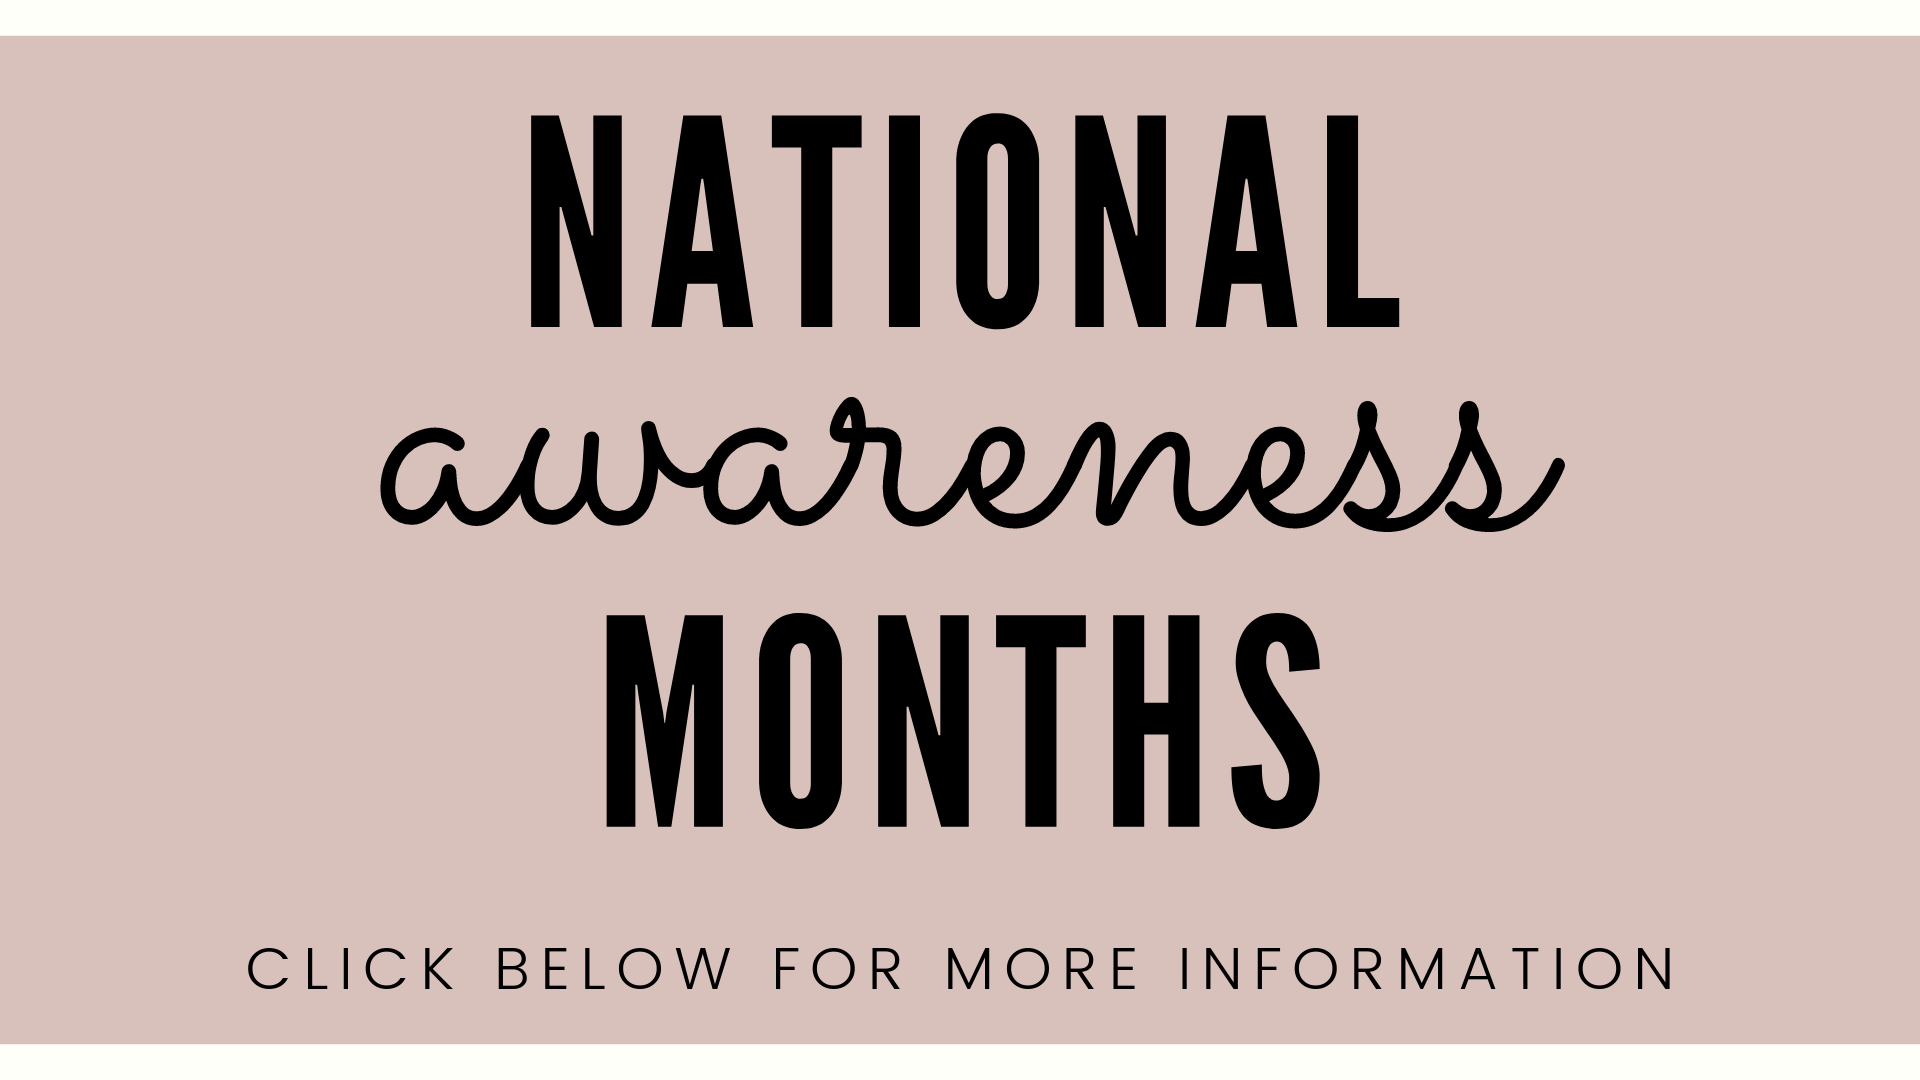 National Awareness Months